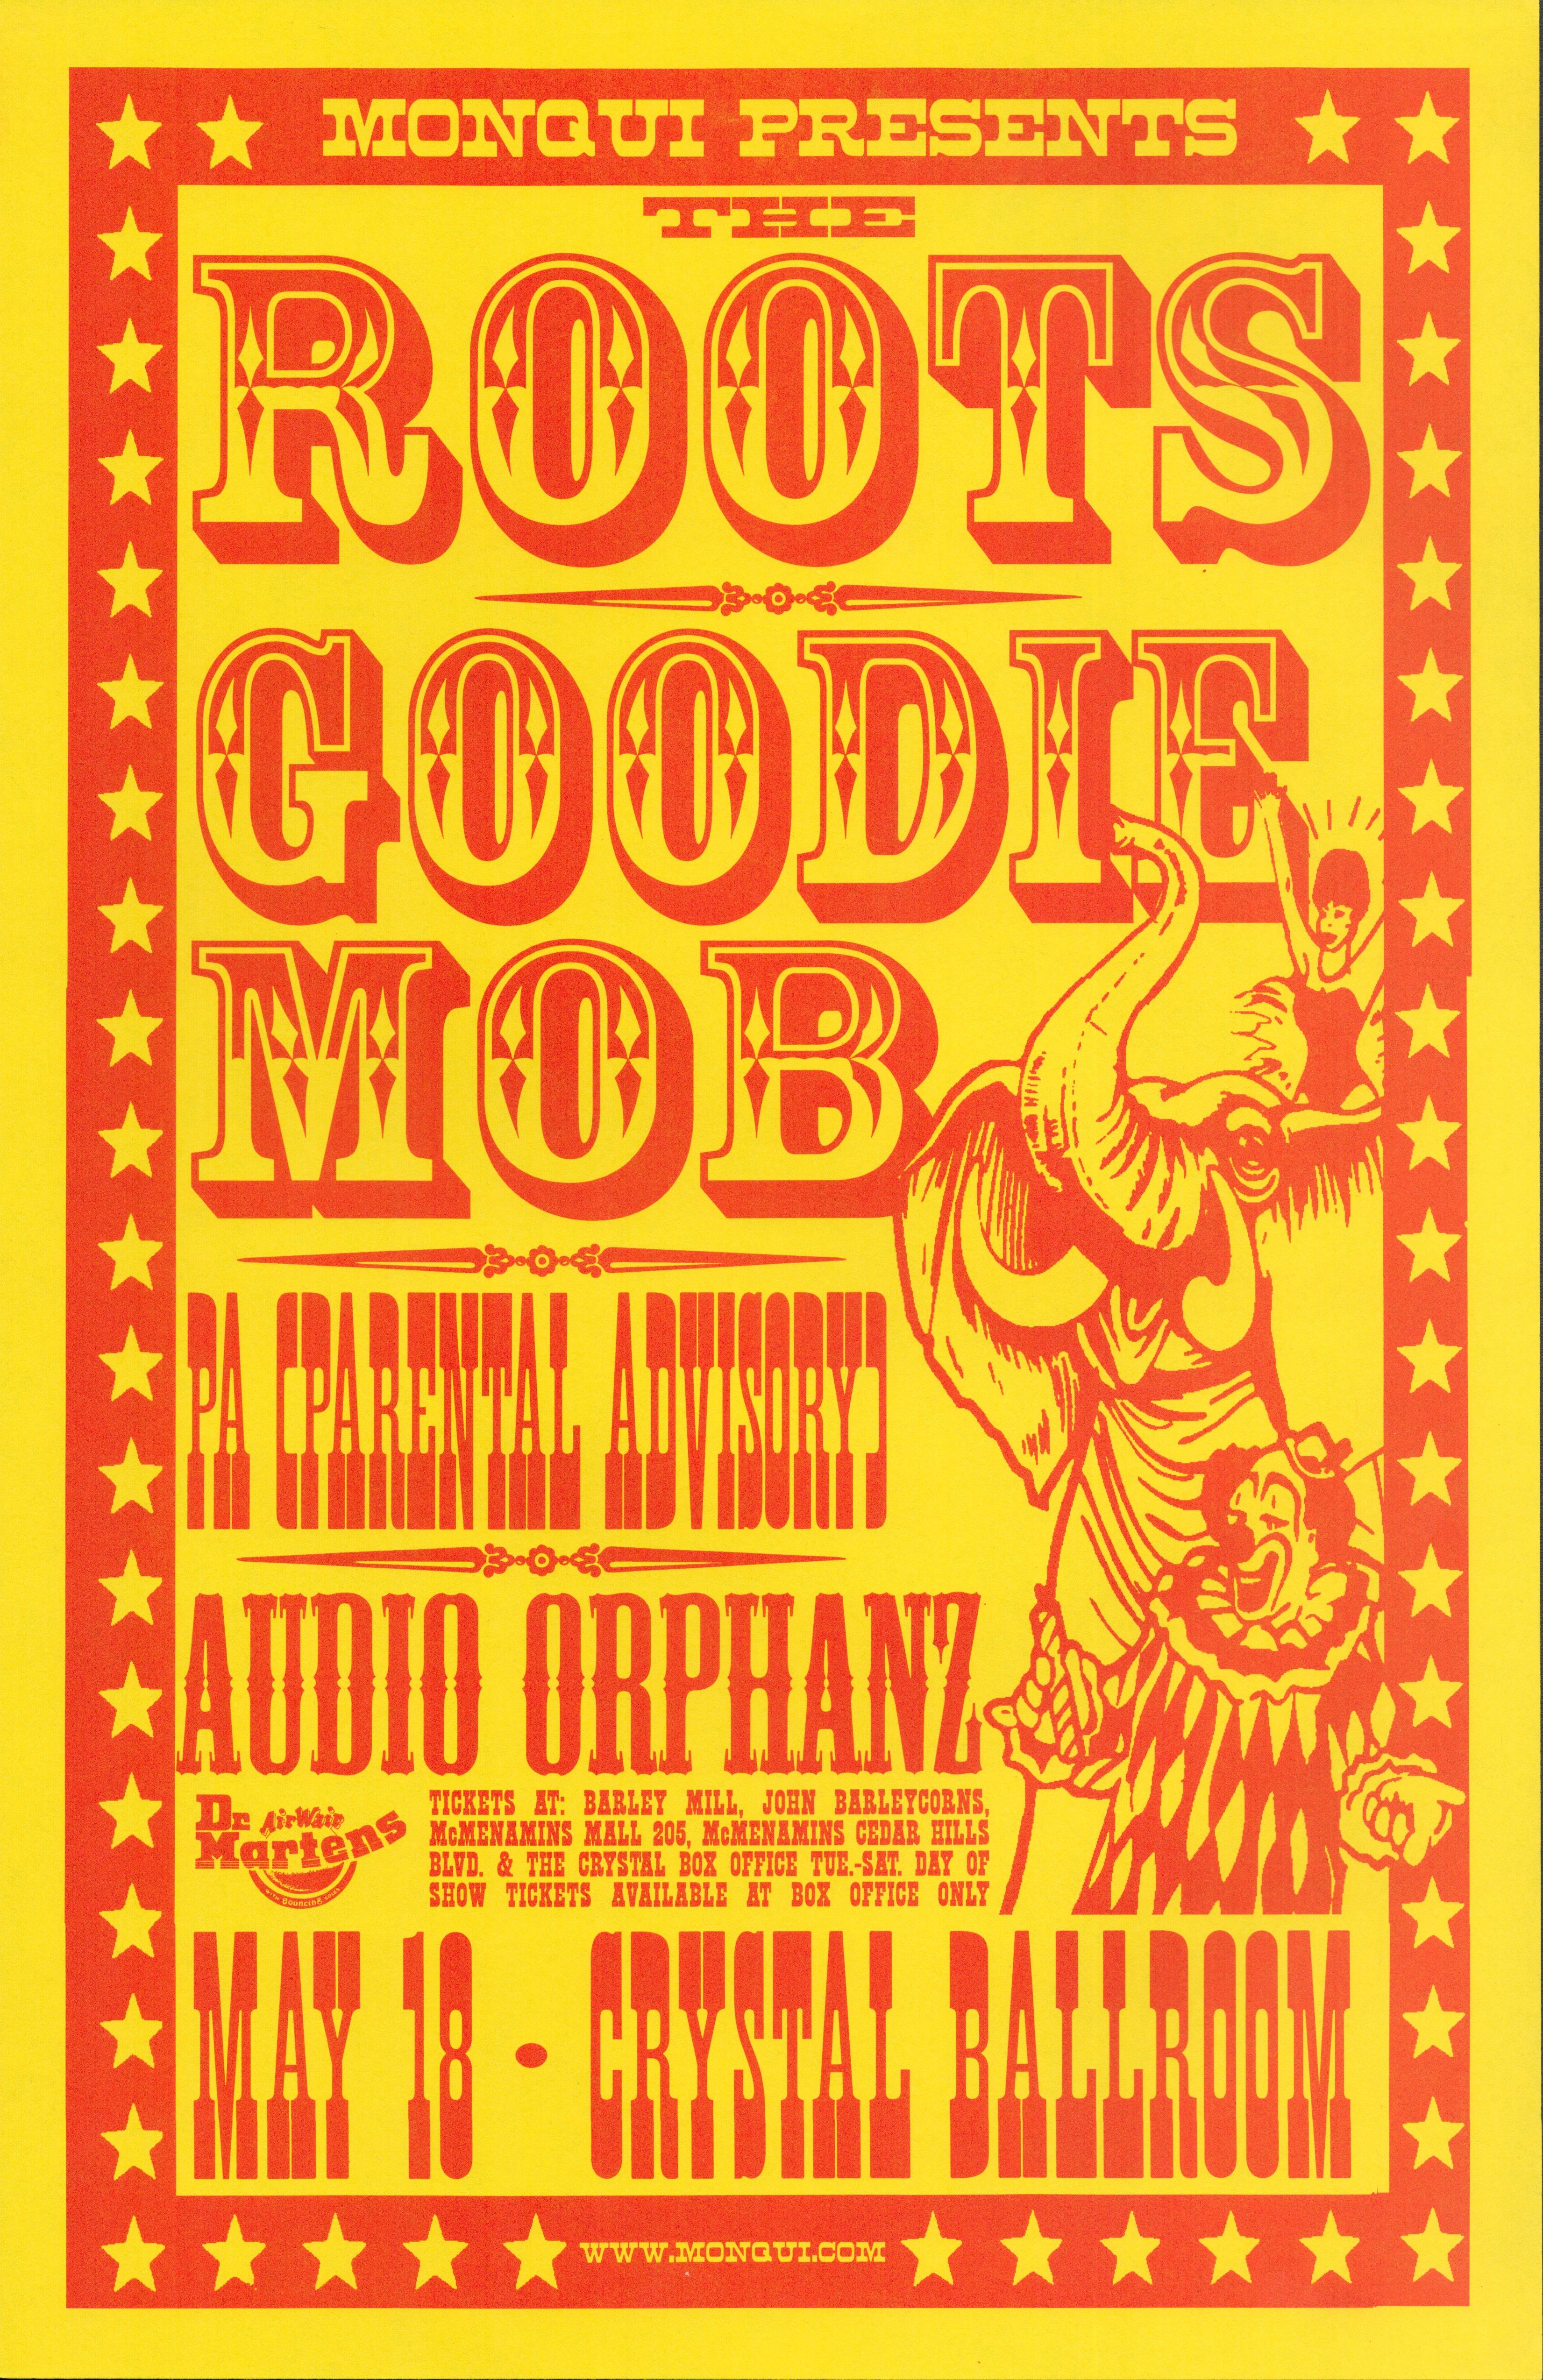 MXP-157.2 Roots Crystal Ballroom 1998 Concert Poster